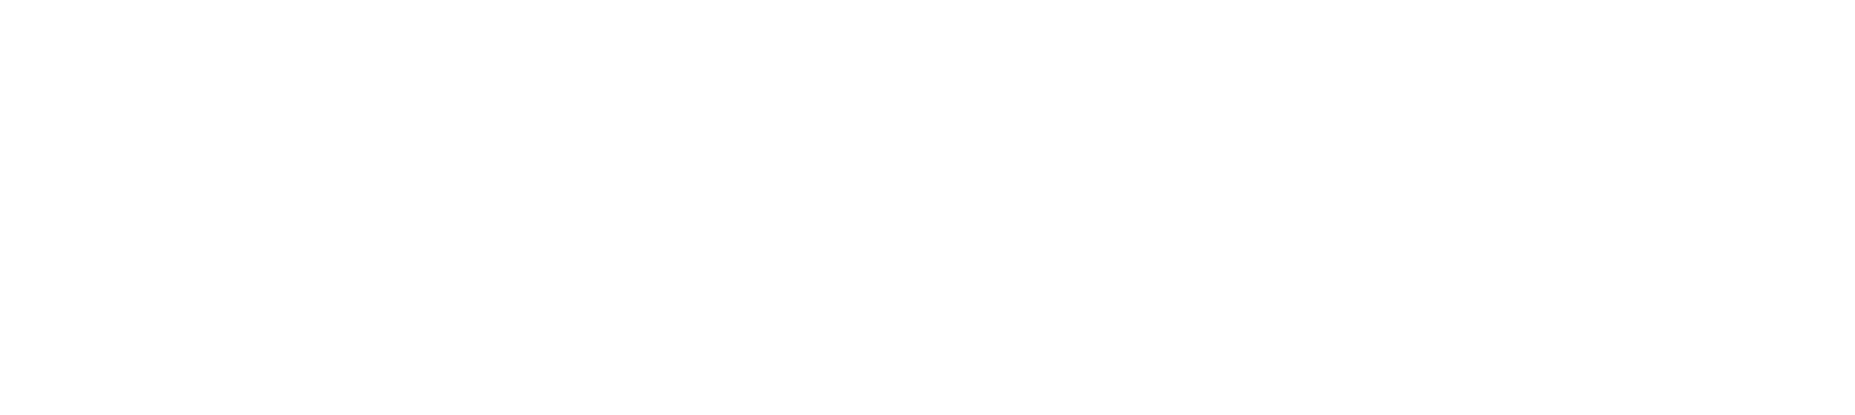 CHROMacademy logo